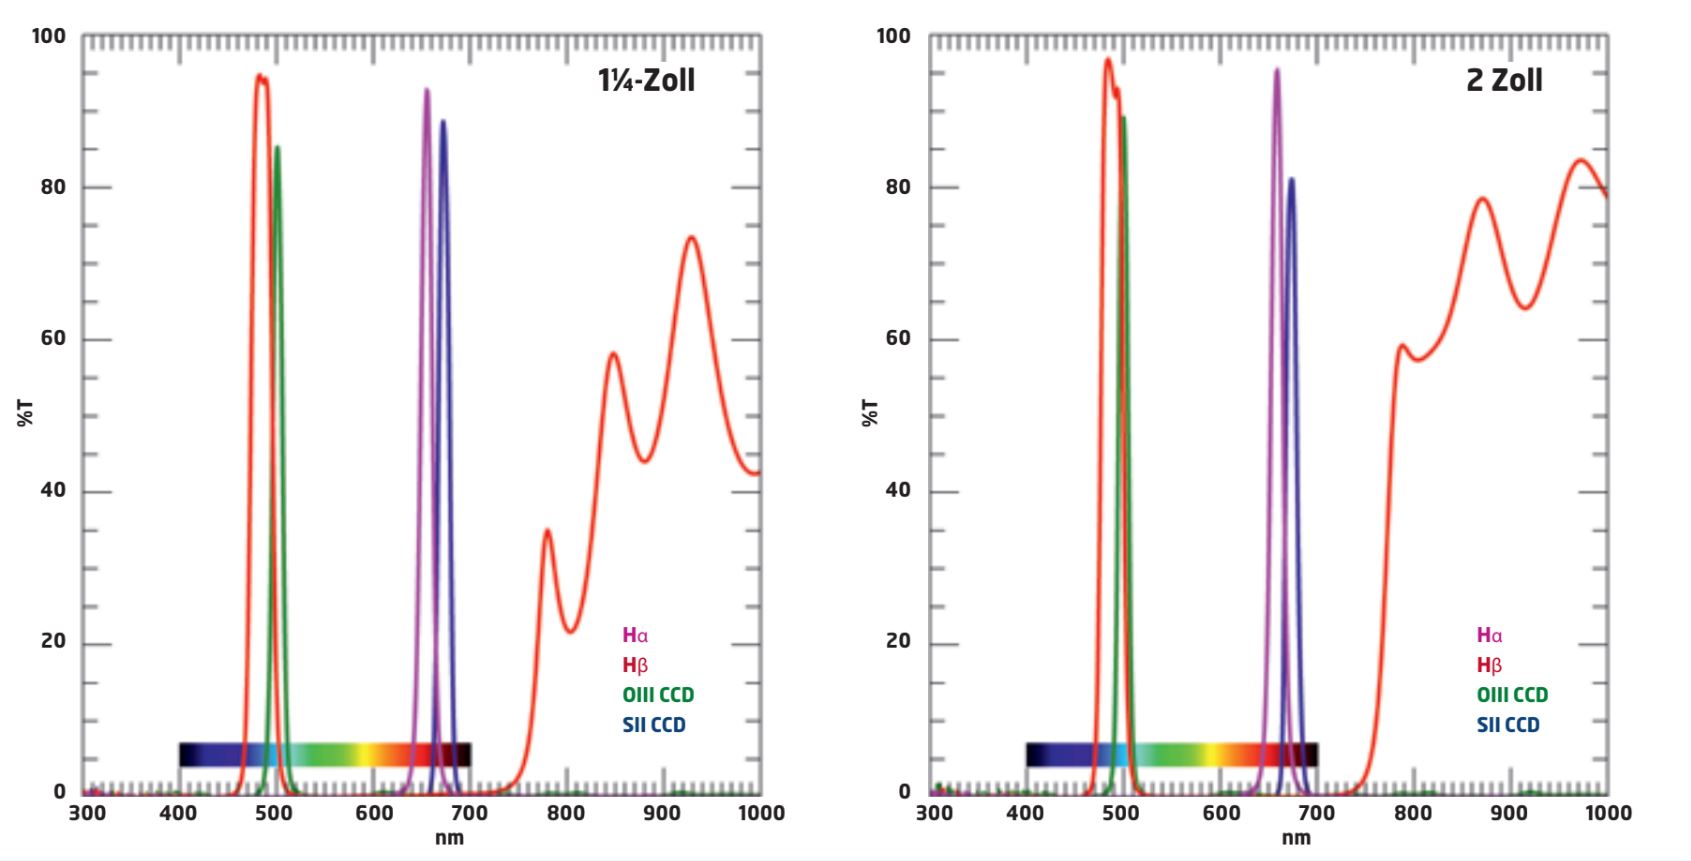 Wykresy transmisji filtrów Hα, Hβ, OIII CCD i SII CCD.